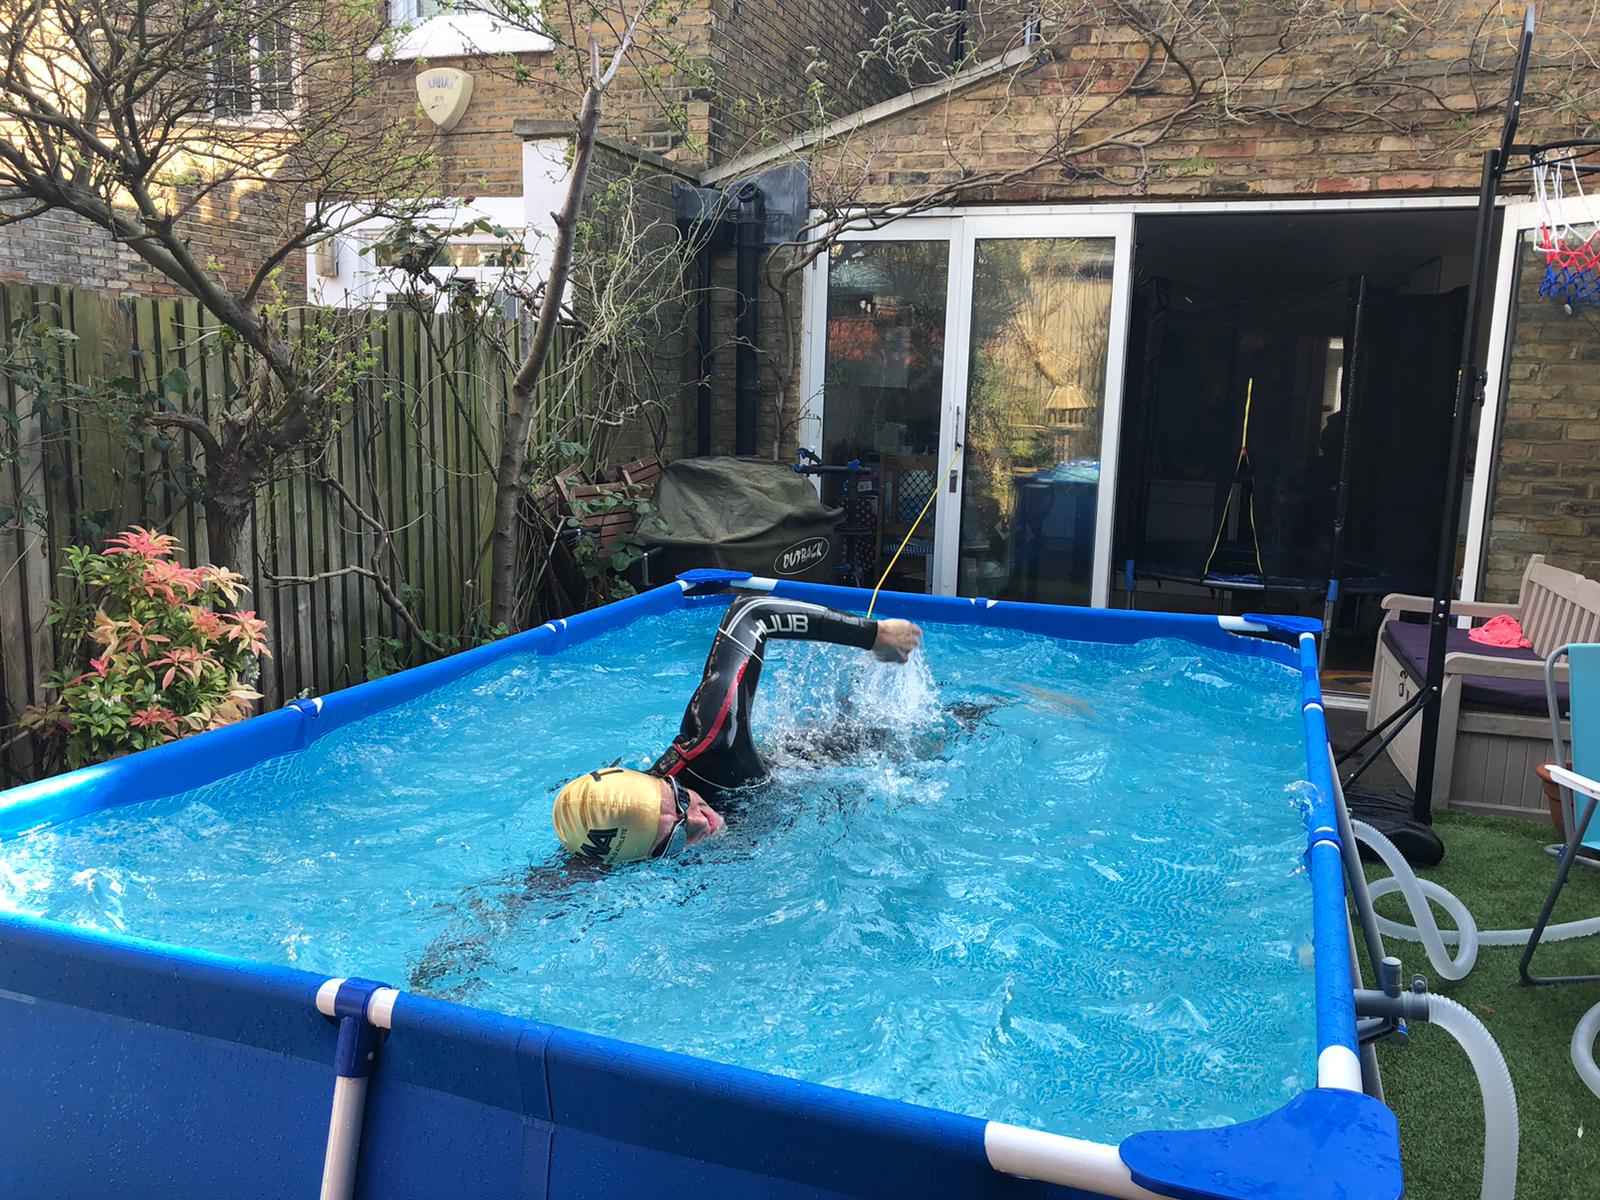 Neil Clark swins in a three-metre swimming pool